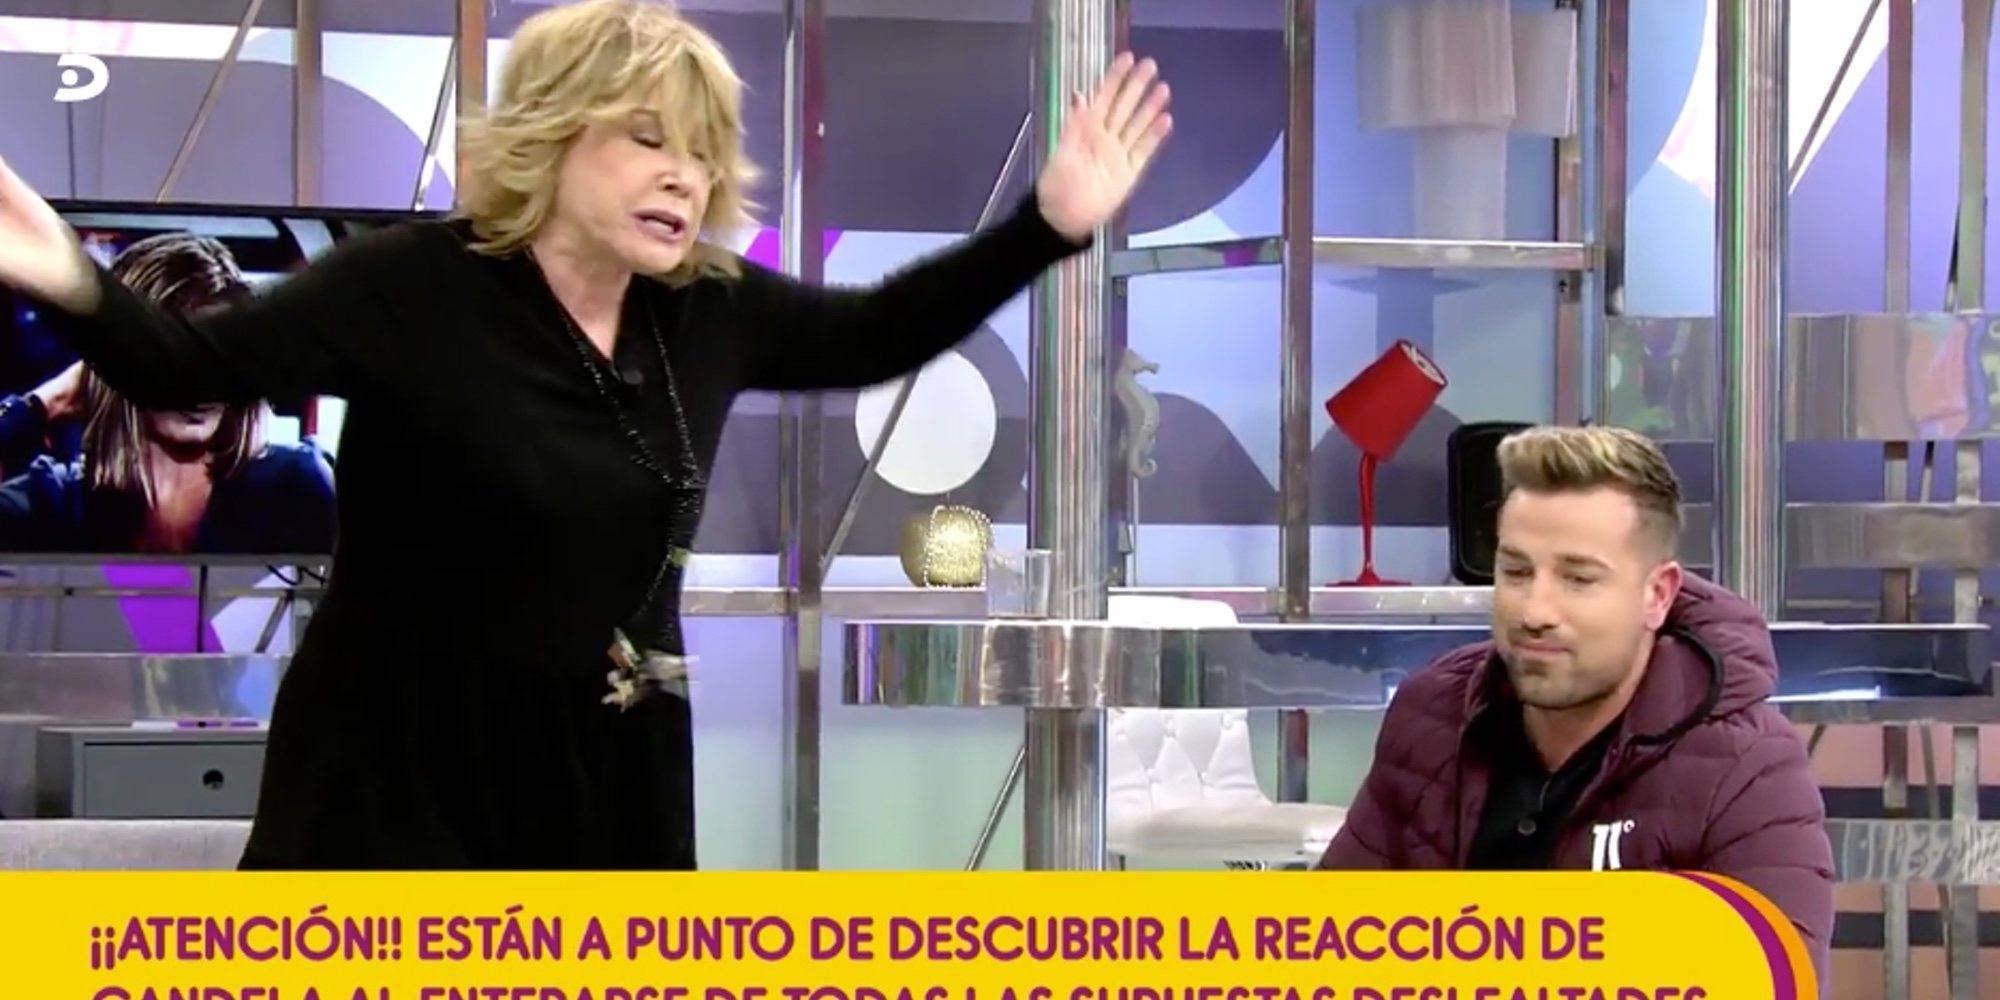 Carlota Corredera y Mila Ximénez explotan contra Rafa Mora: "¡Eres un imbecil!"